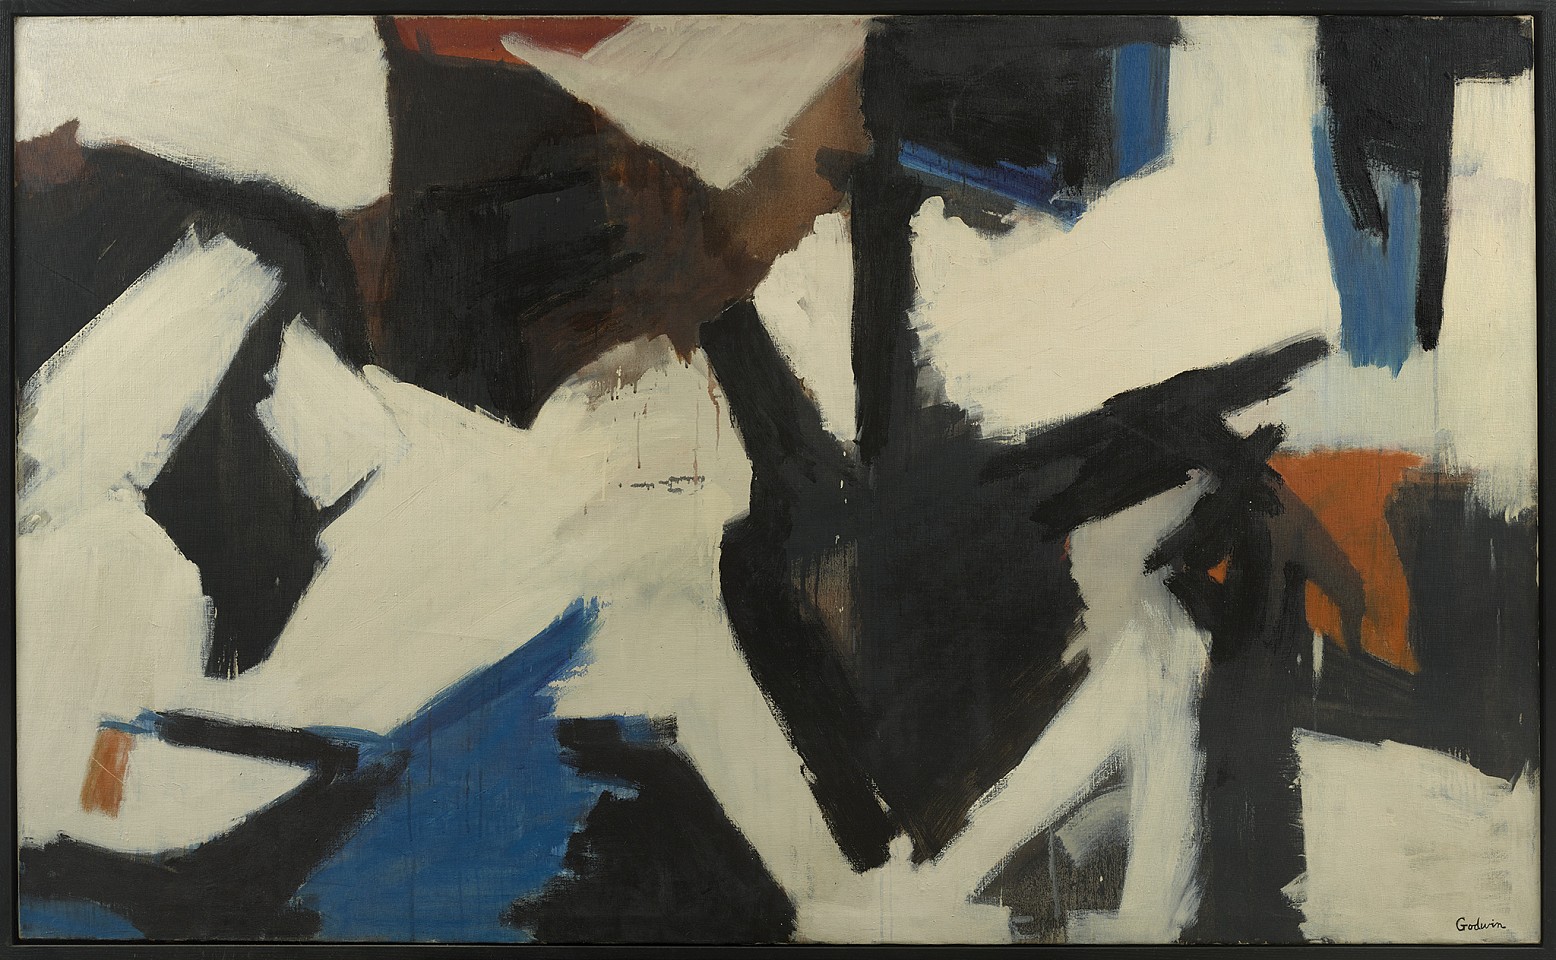 Judith Godwin, Into the Depth | SOLD, 1957
Oil on canvas, 51 1/8 x 84 in. (129.9 x 213.4 cm)
GOD-00049